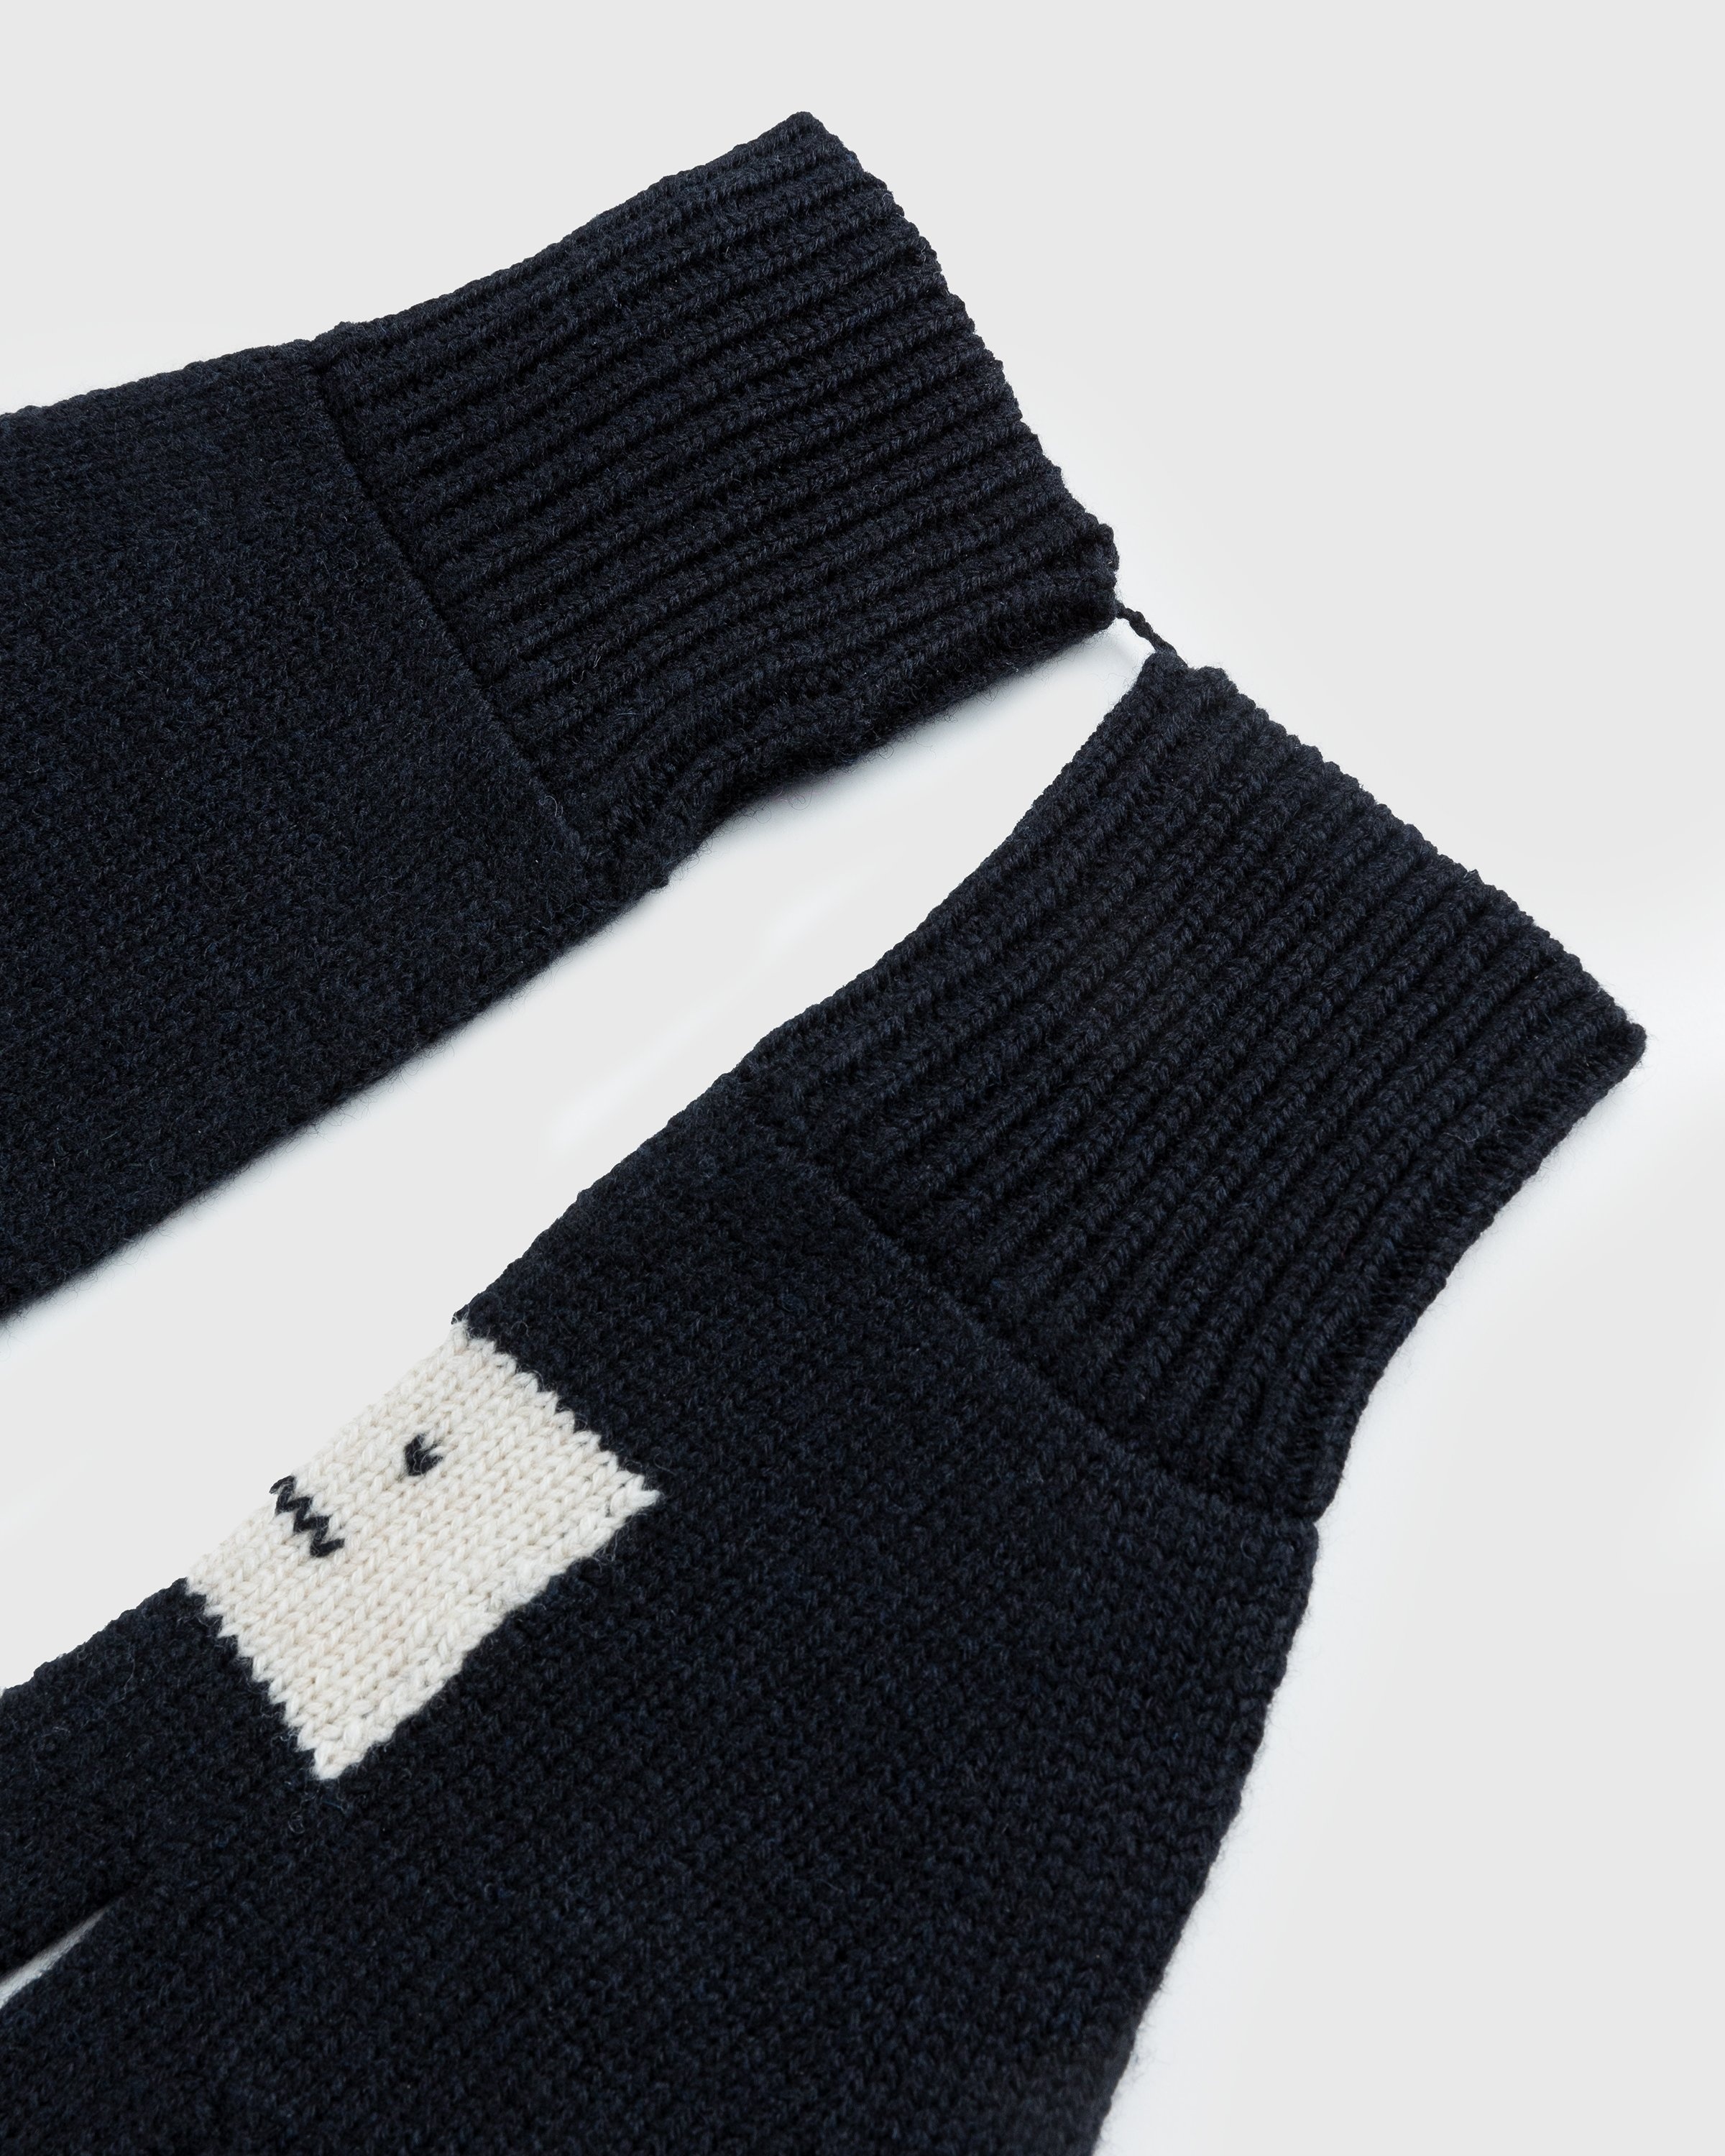 Acne Studios – Knit Gloves Black/Oatmeal Melange - 5-Finger - Black - Image 2